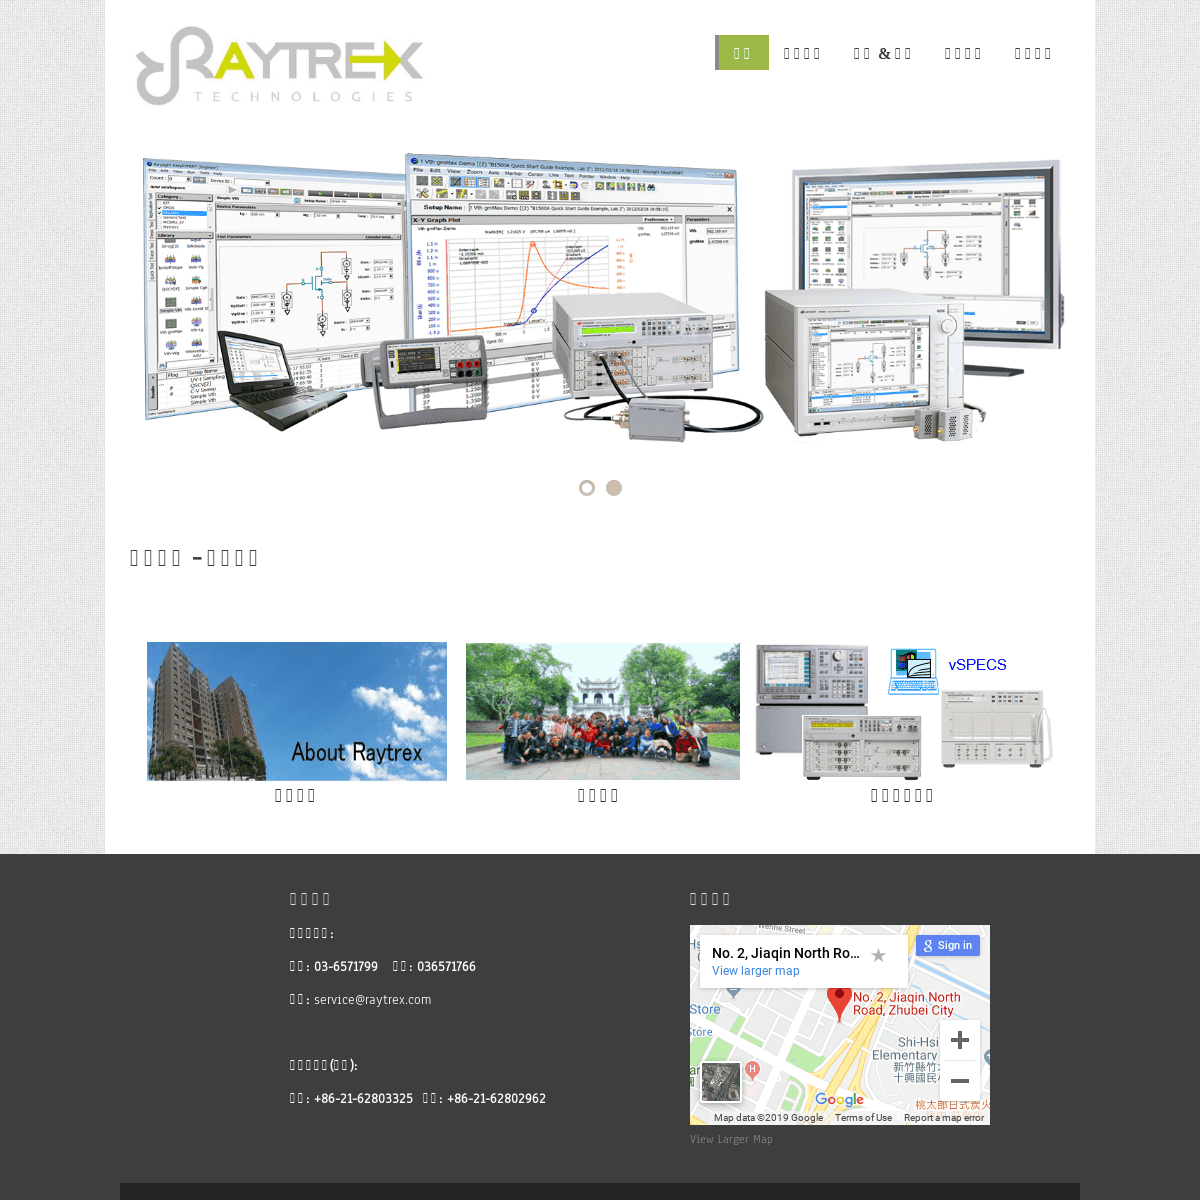 raytrex - 和瑞科技 